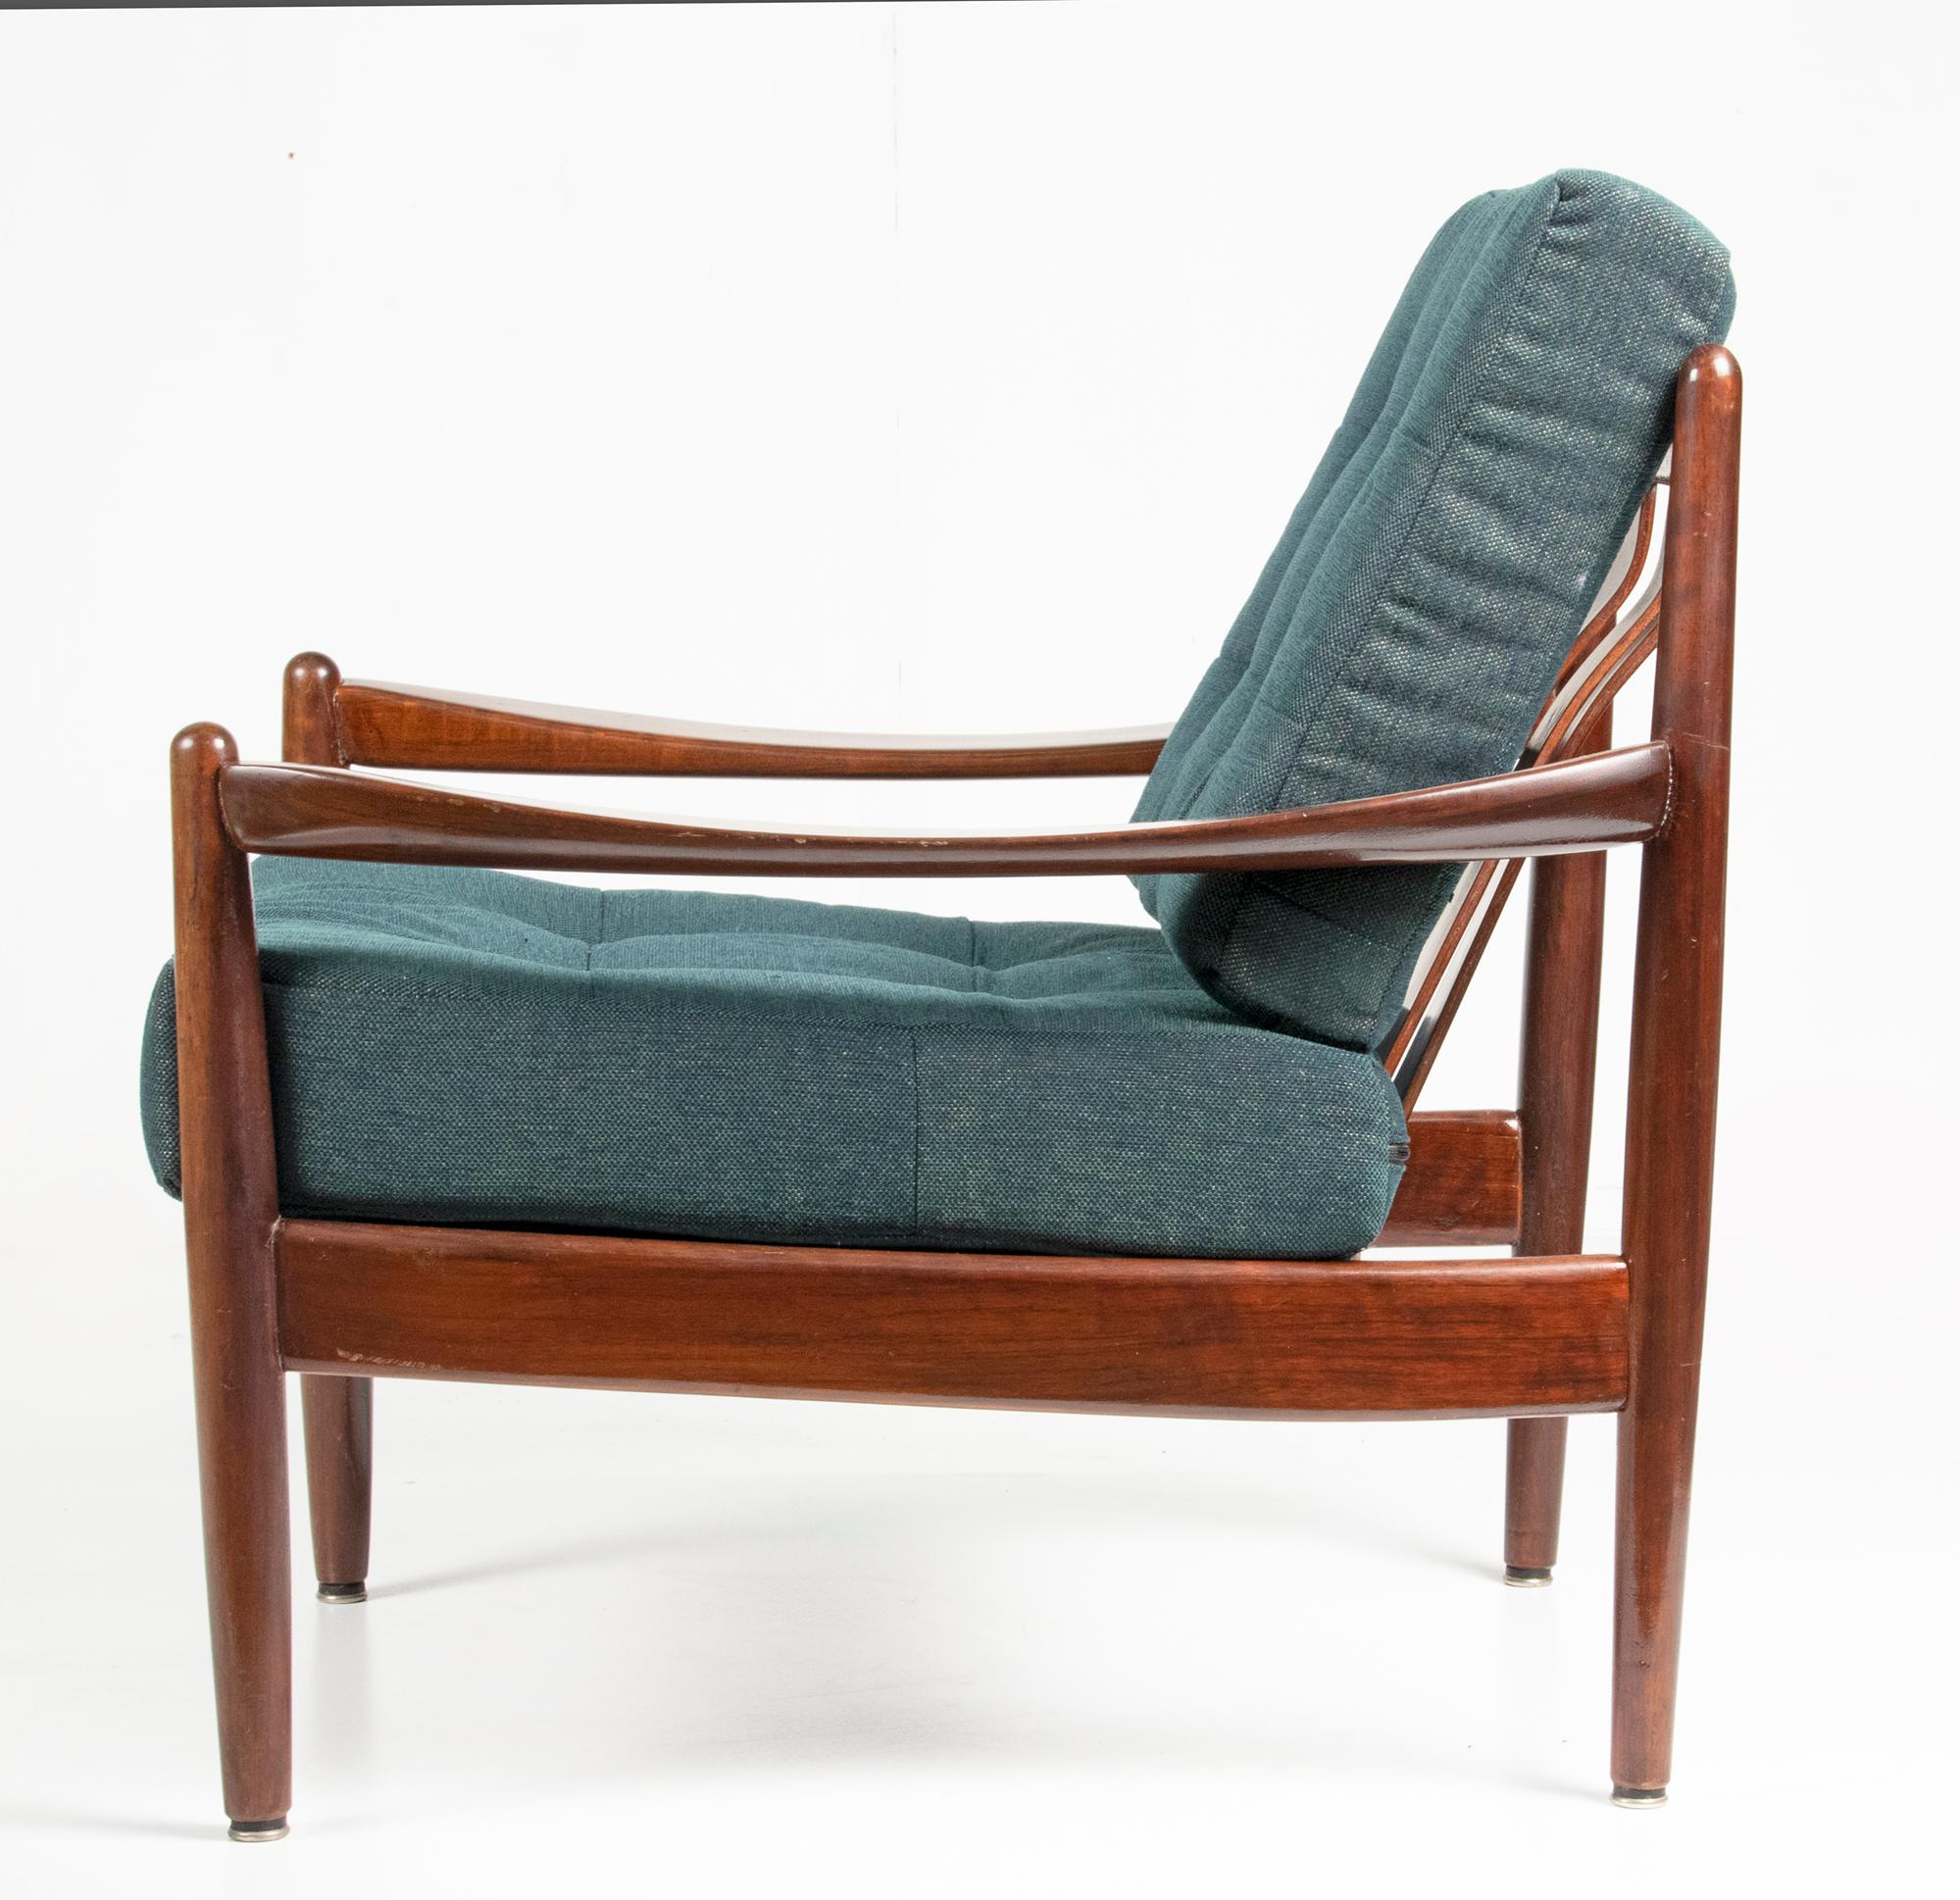 Hand-Crafted Mid-20th Century Modern Danish Armchair